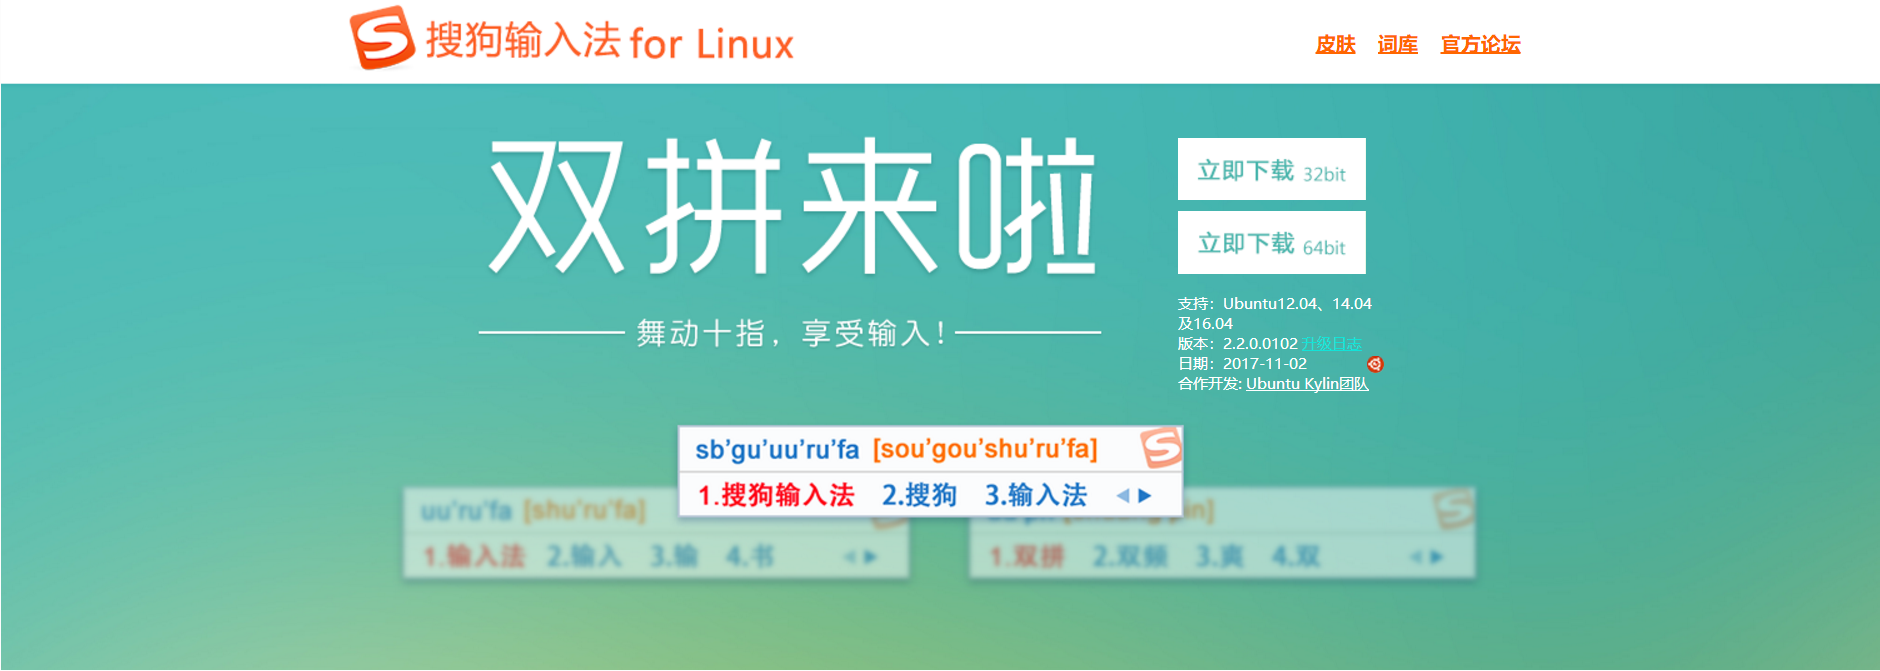 Ubuntu - 安装搜狗输入法 for Linux